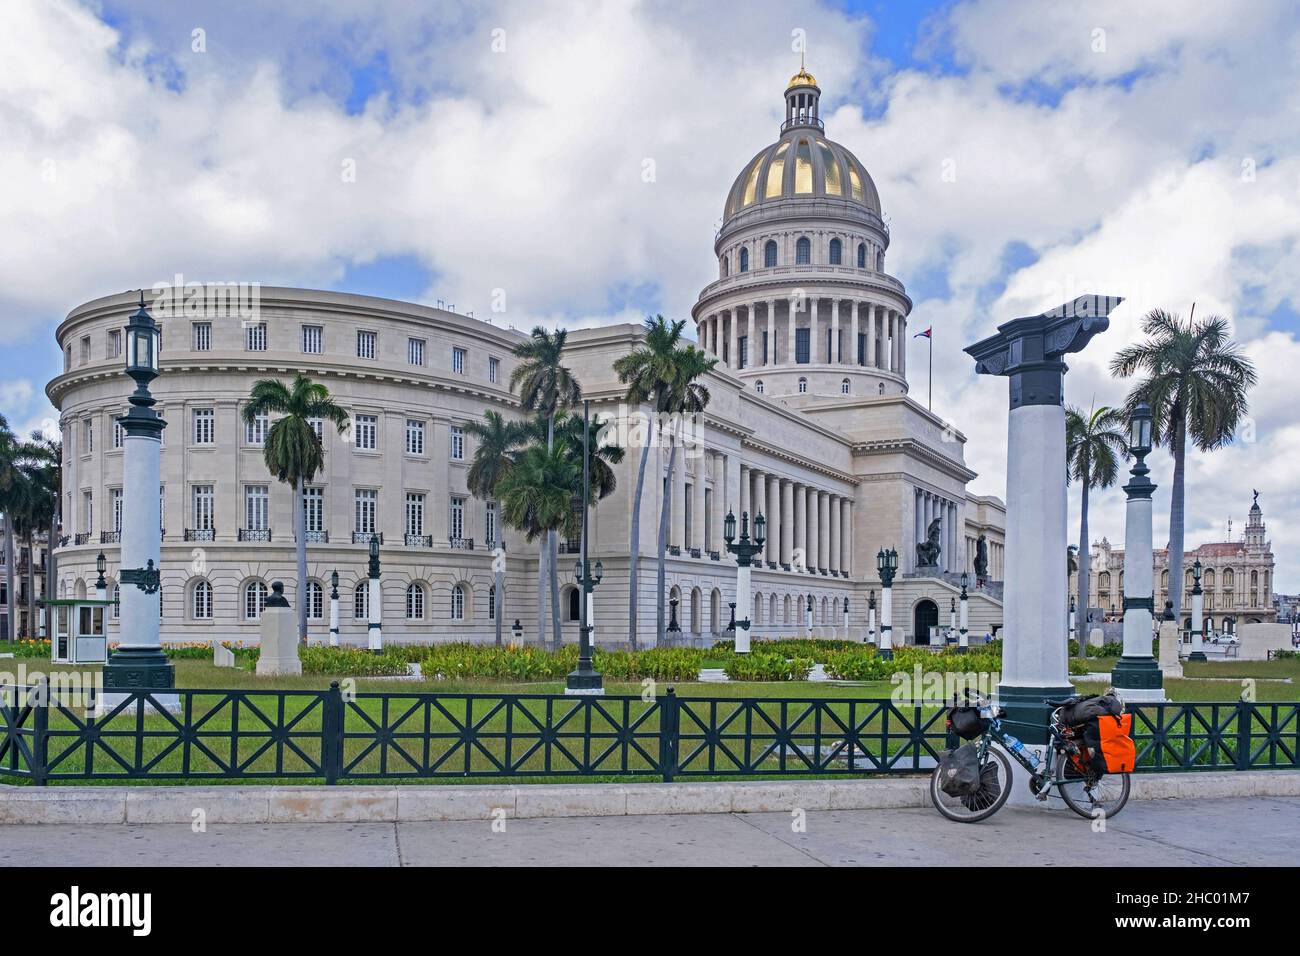 El Capitolio / Kapitolgebäude / Capitolio Nacional de La Habana im Stadtzentrum von Havanna auf der Insel Kuba, Karibik Stockfoto